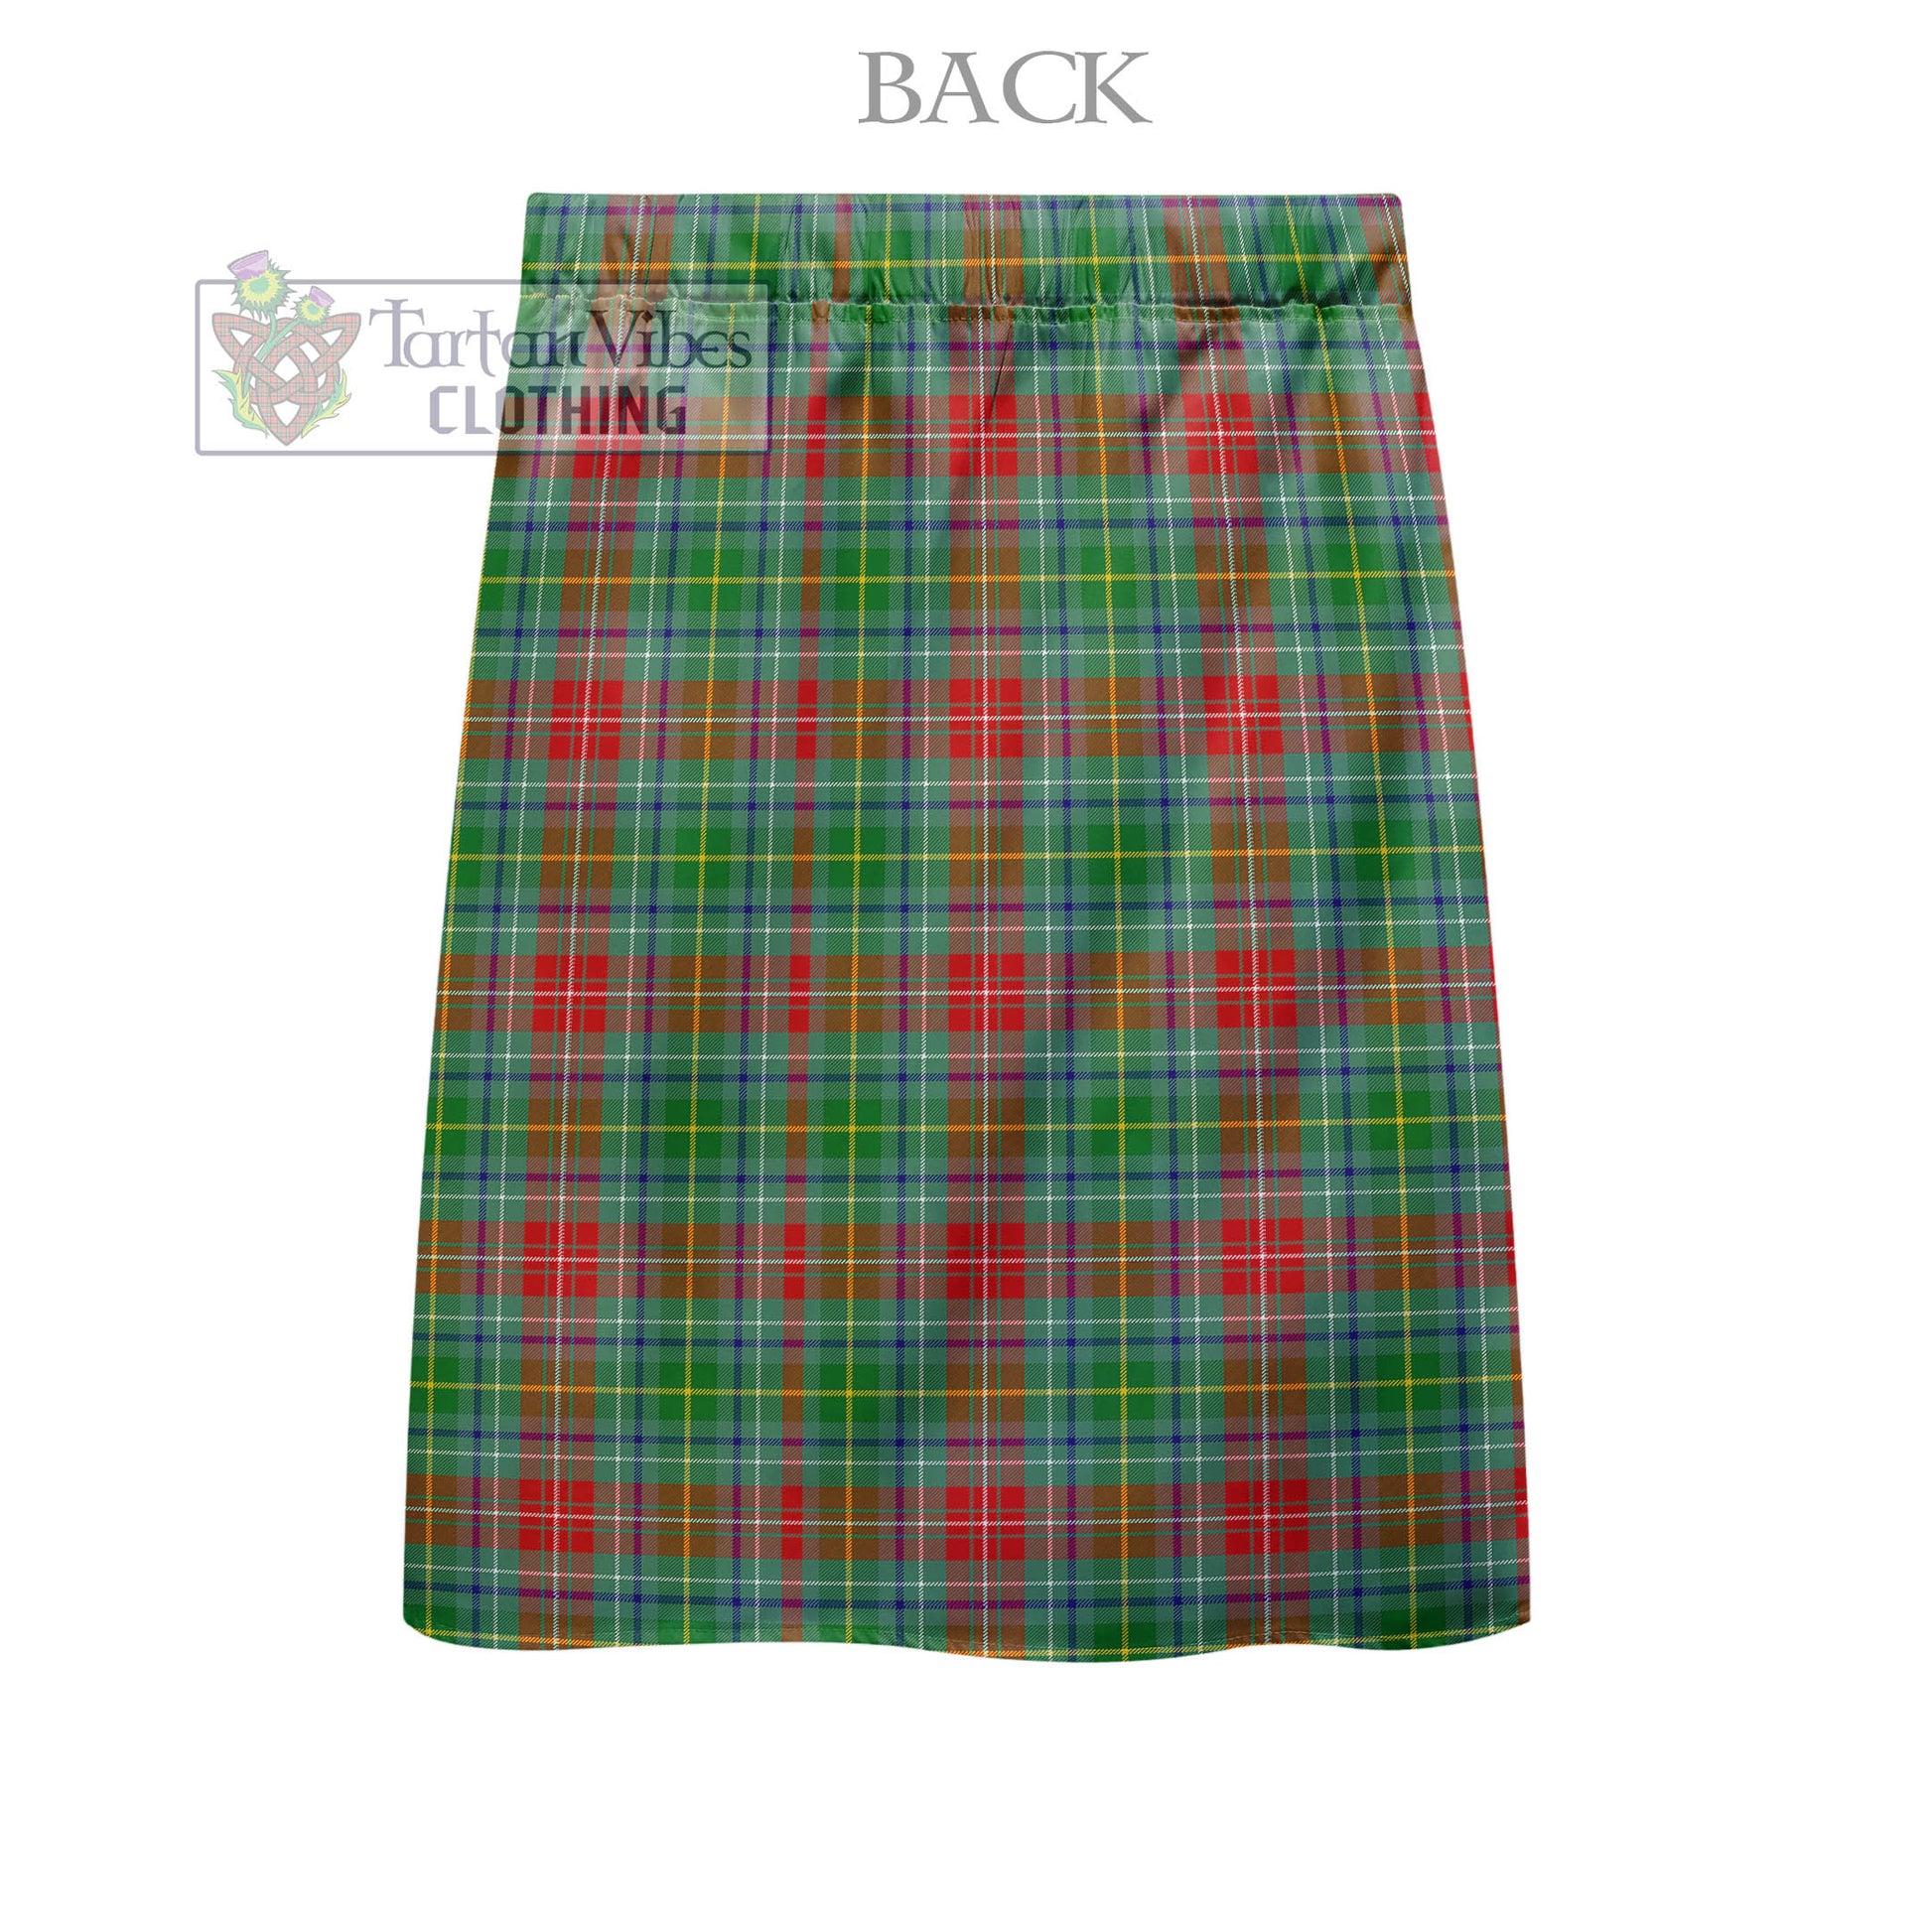 Tartan Vibes Clothing Muirhead Tartan Men's Pleated Skirt - Fashion Casual Retro Scottish Style